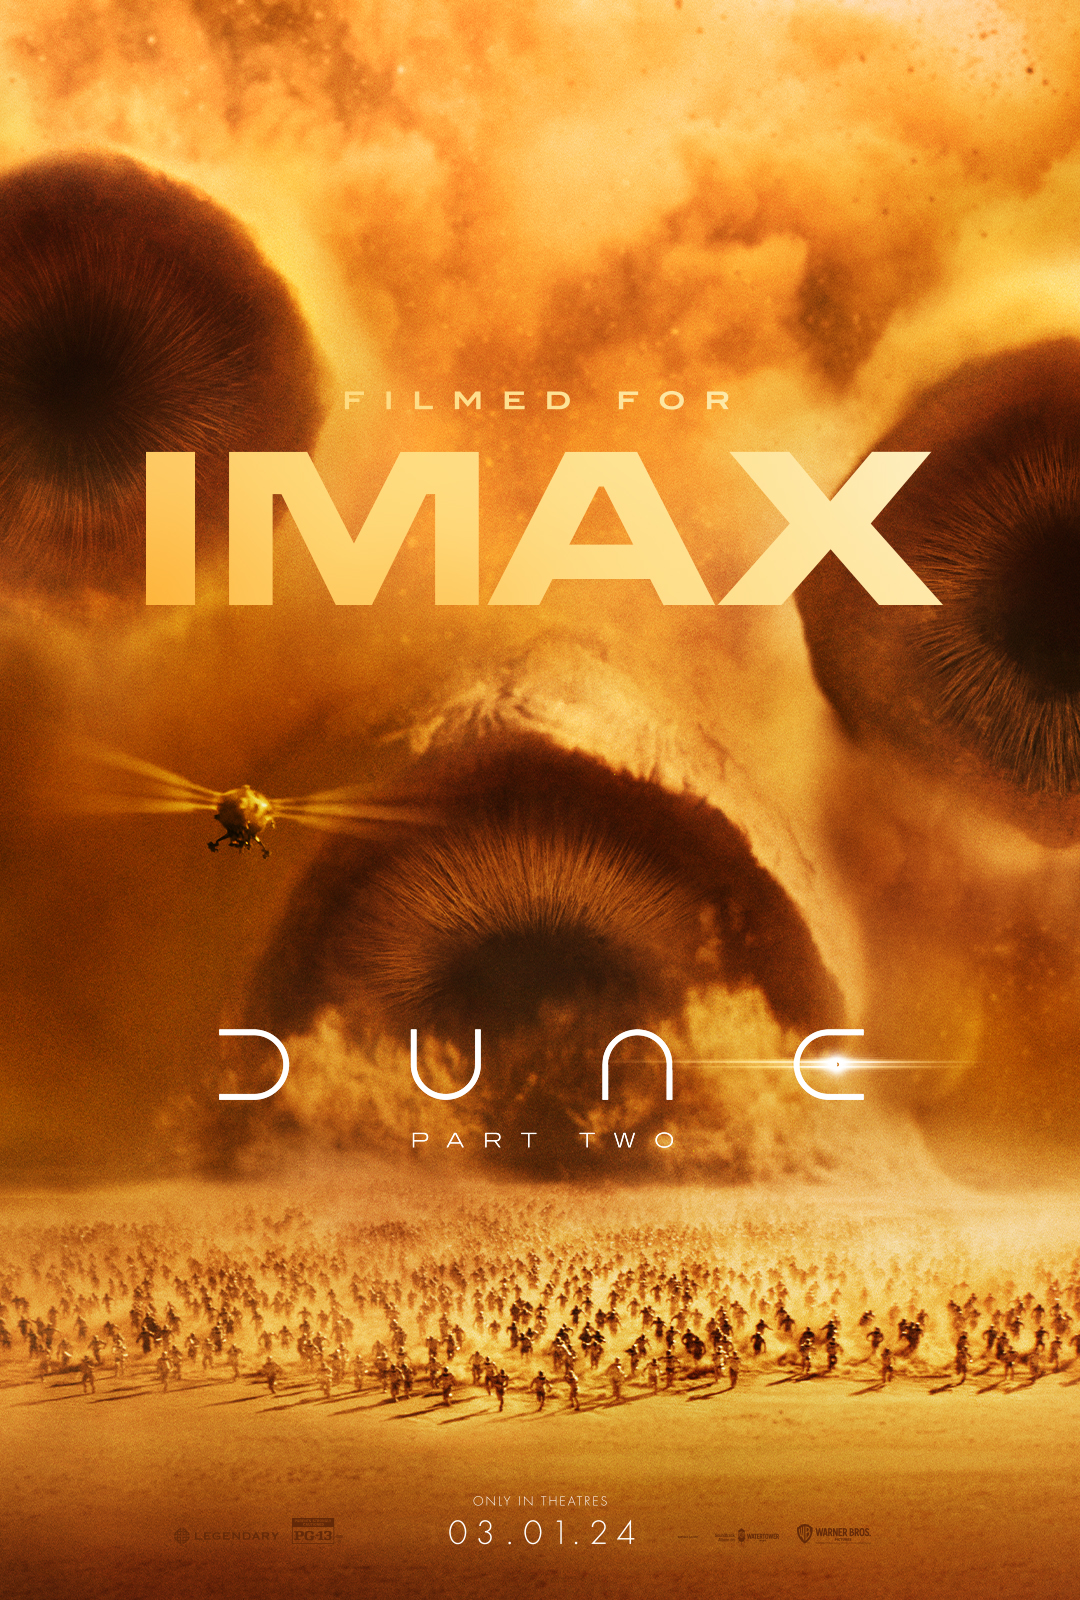 Exclusive Art | IMAX